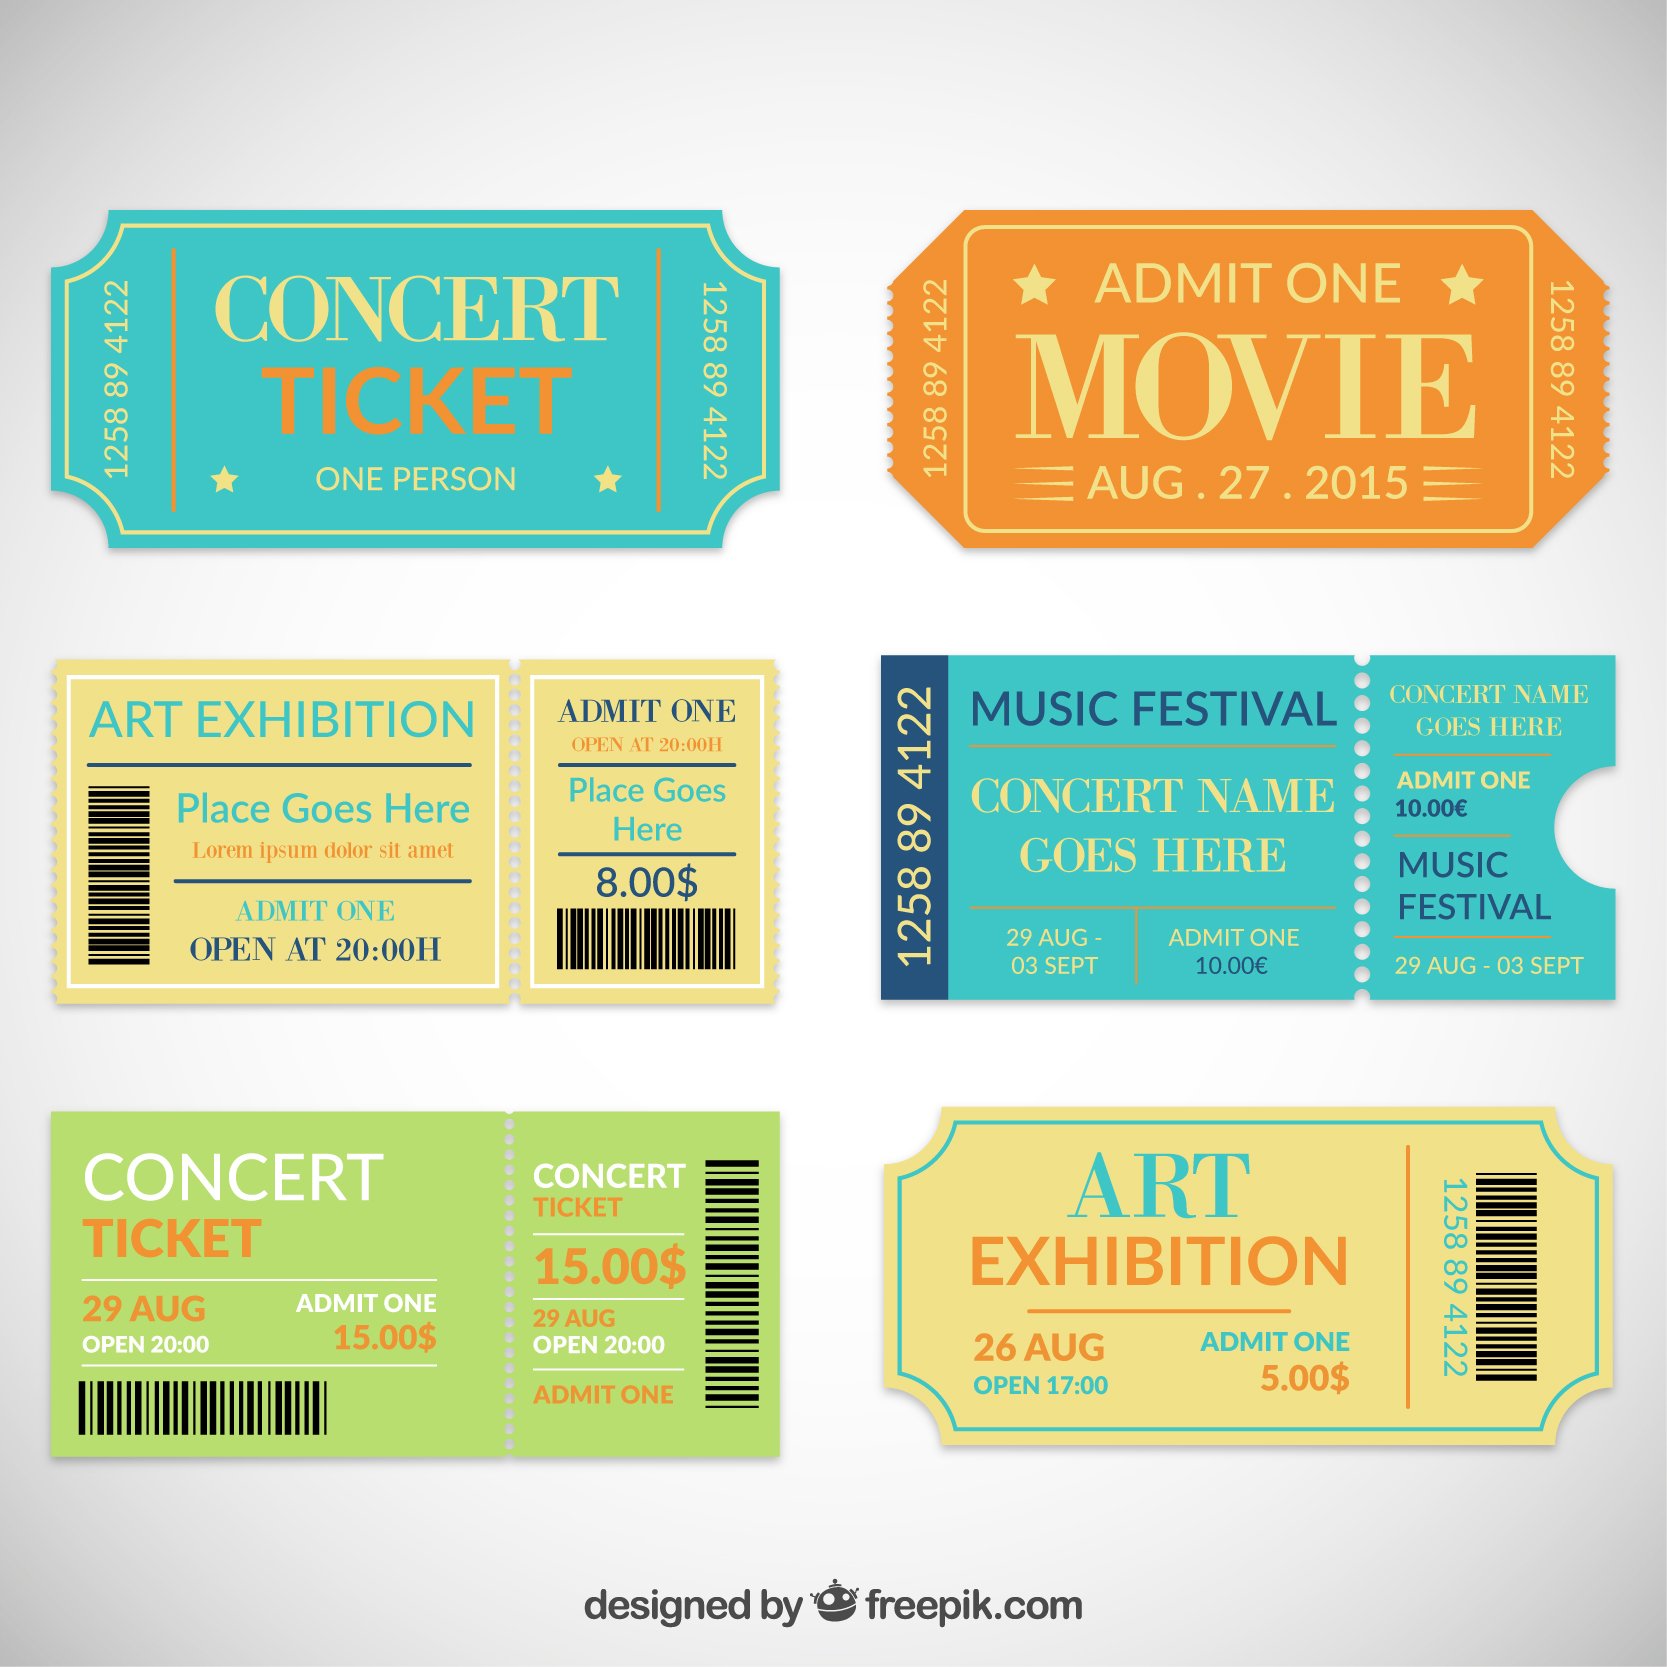 All the concert tickets already. Билет в театр вектор. Макет билета в театр. Макет билета на концерт. Билет в театр шаблон.